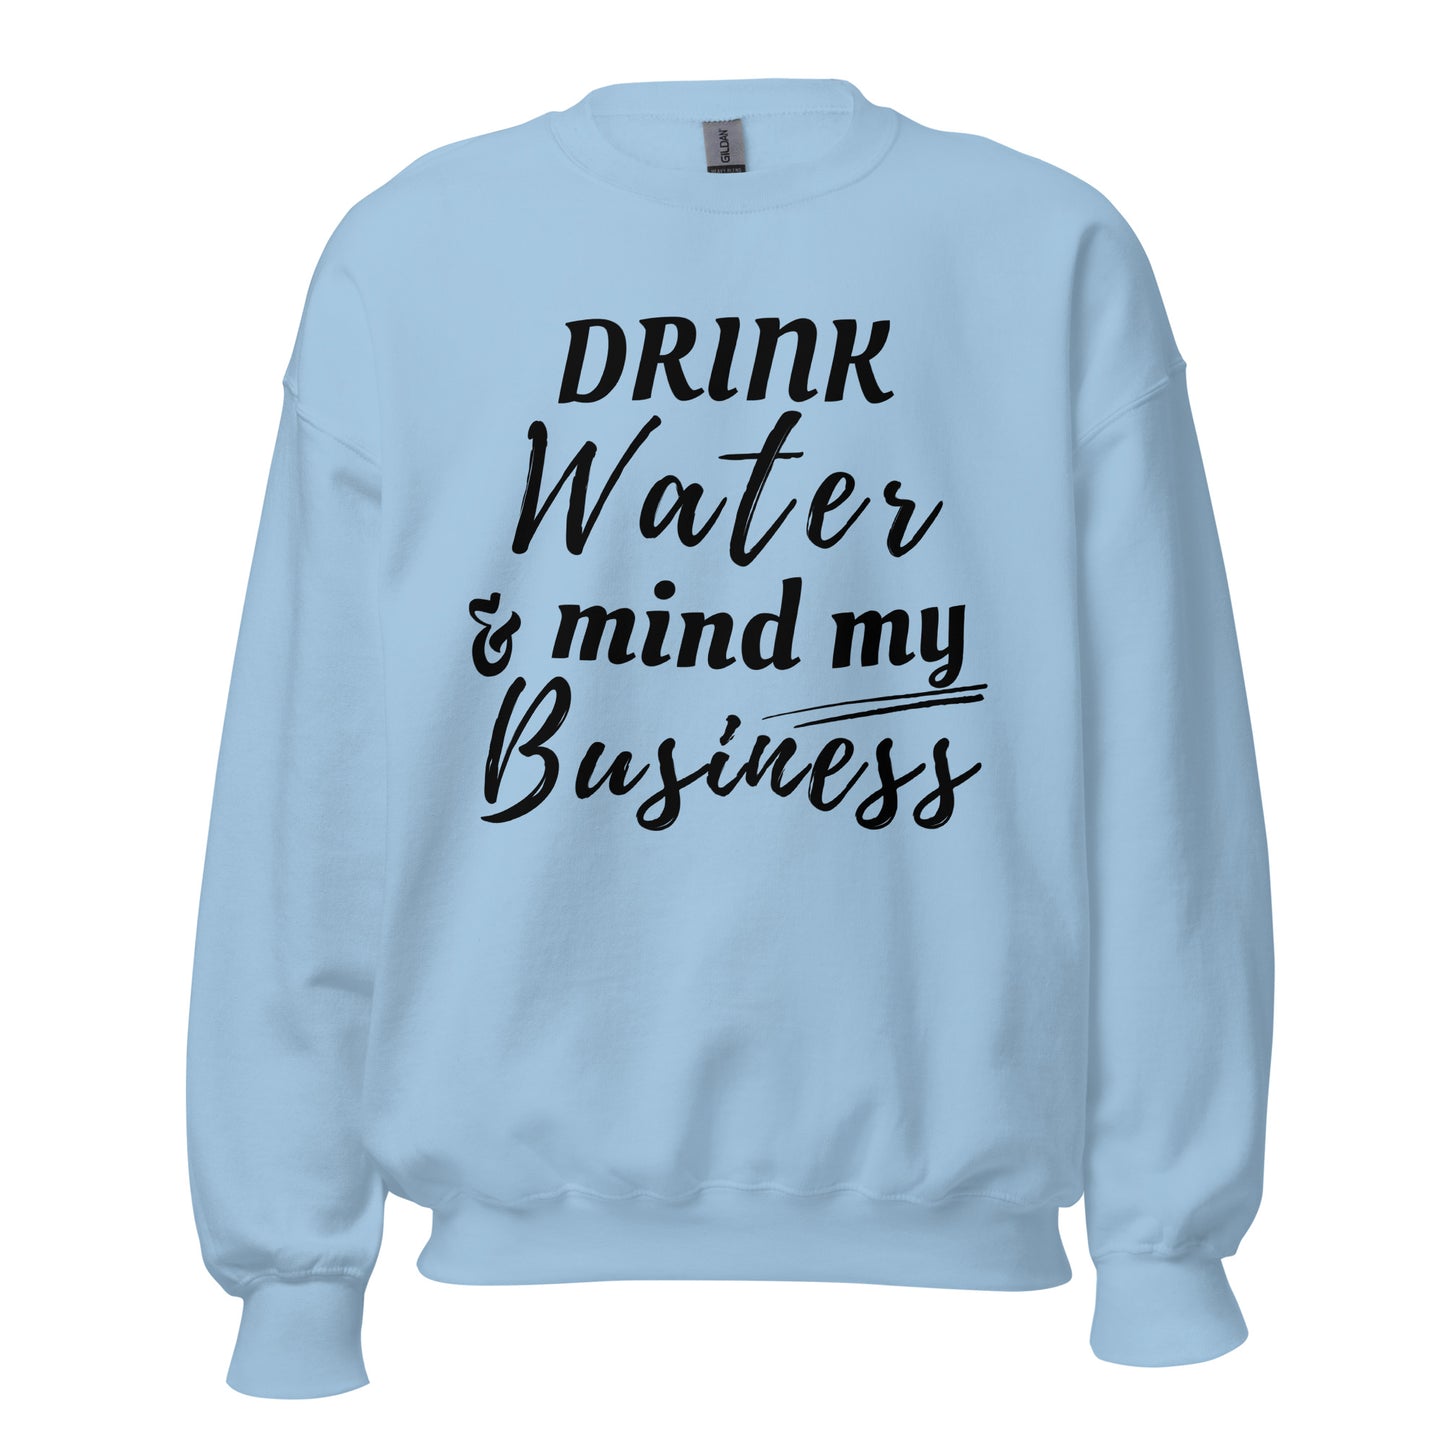 "Drink Water and Mind my Buisness" Unisex Sweatshirt